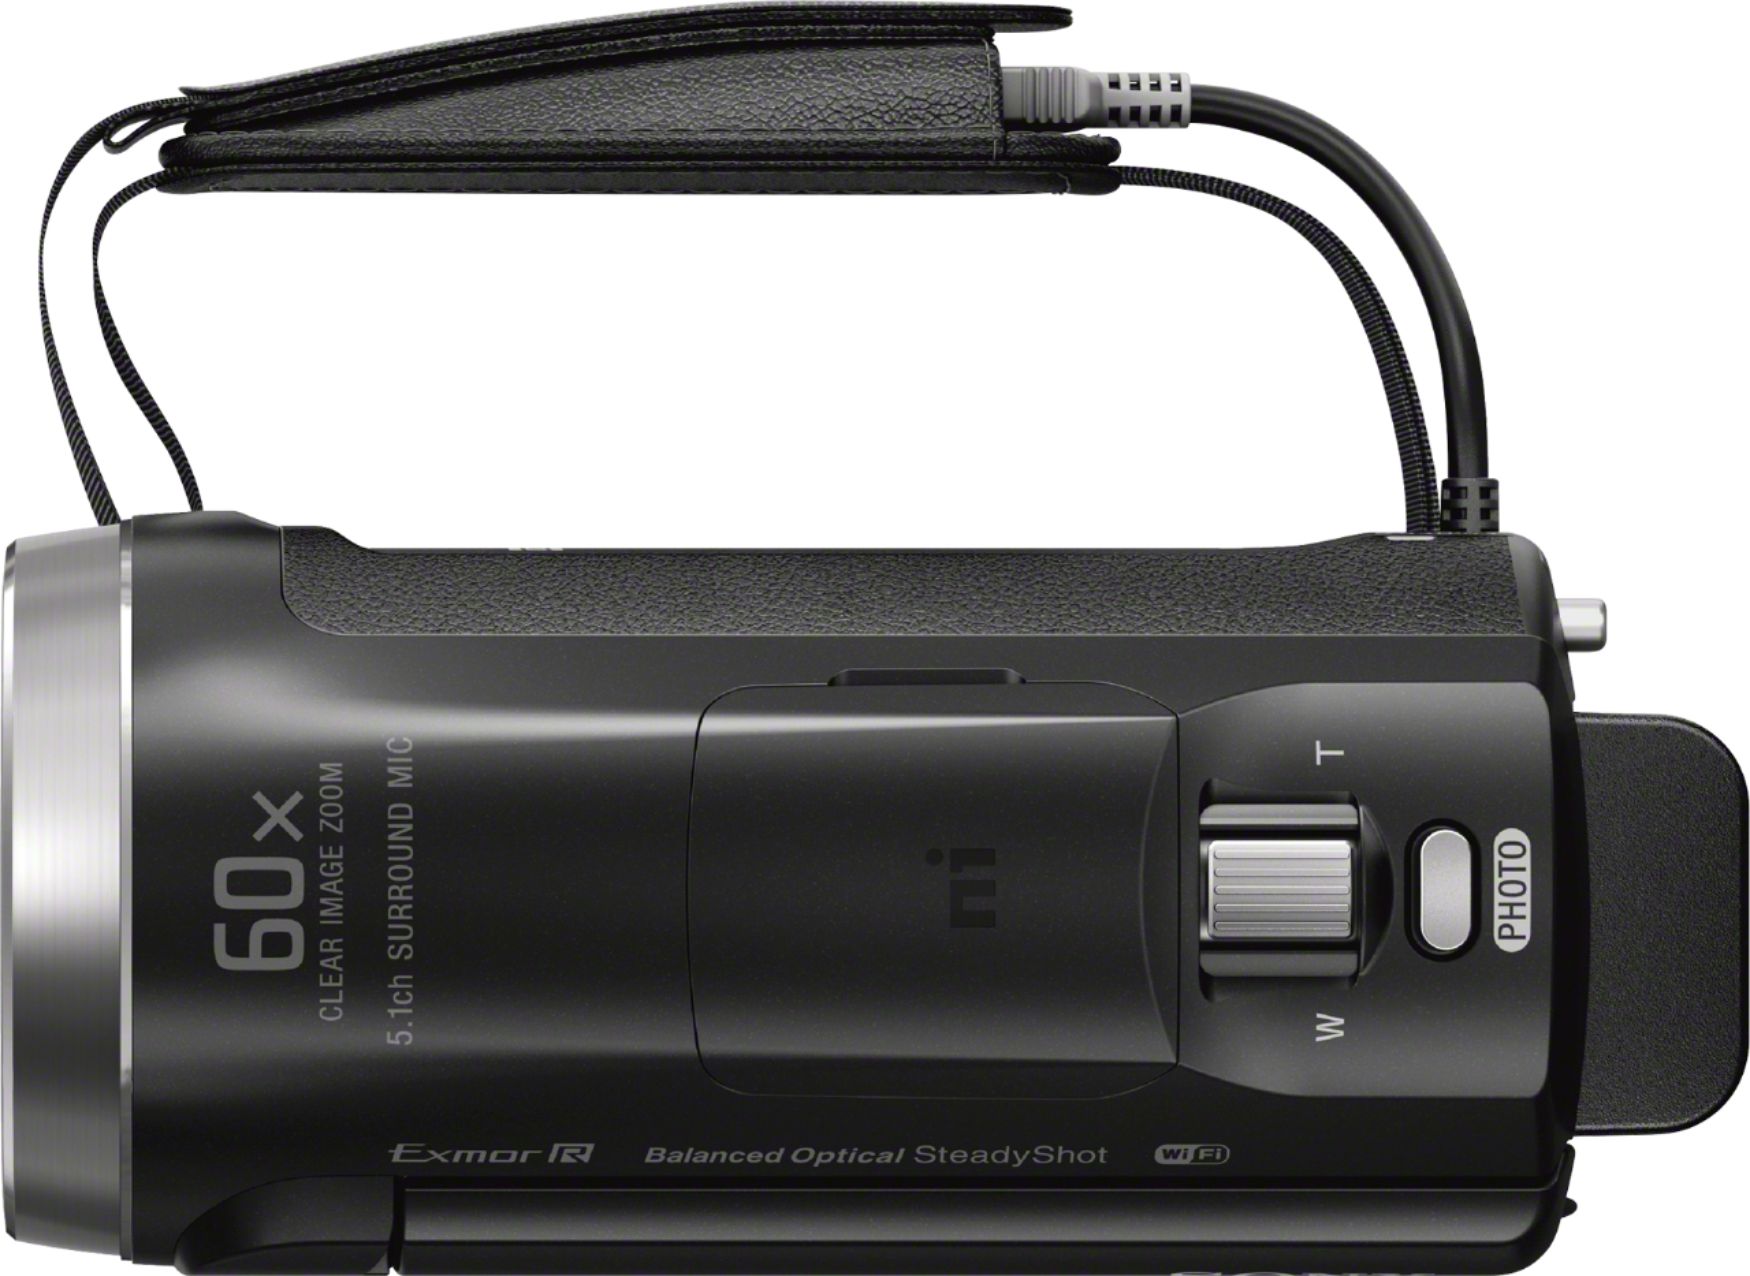 Best Buy: Sony Handycam CX675 32GB Flash Memory Camcorder Black HDRCX675/B